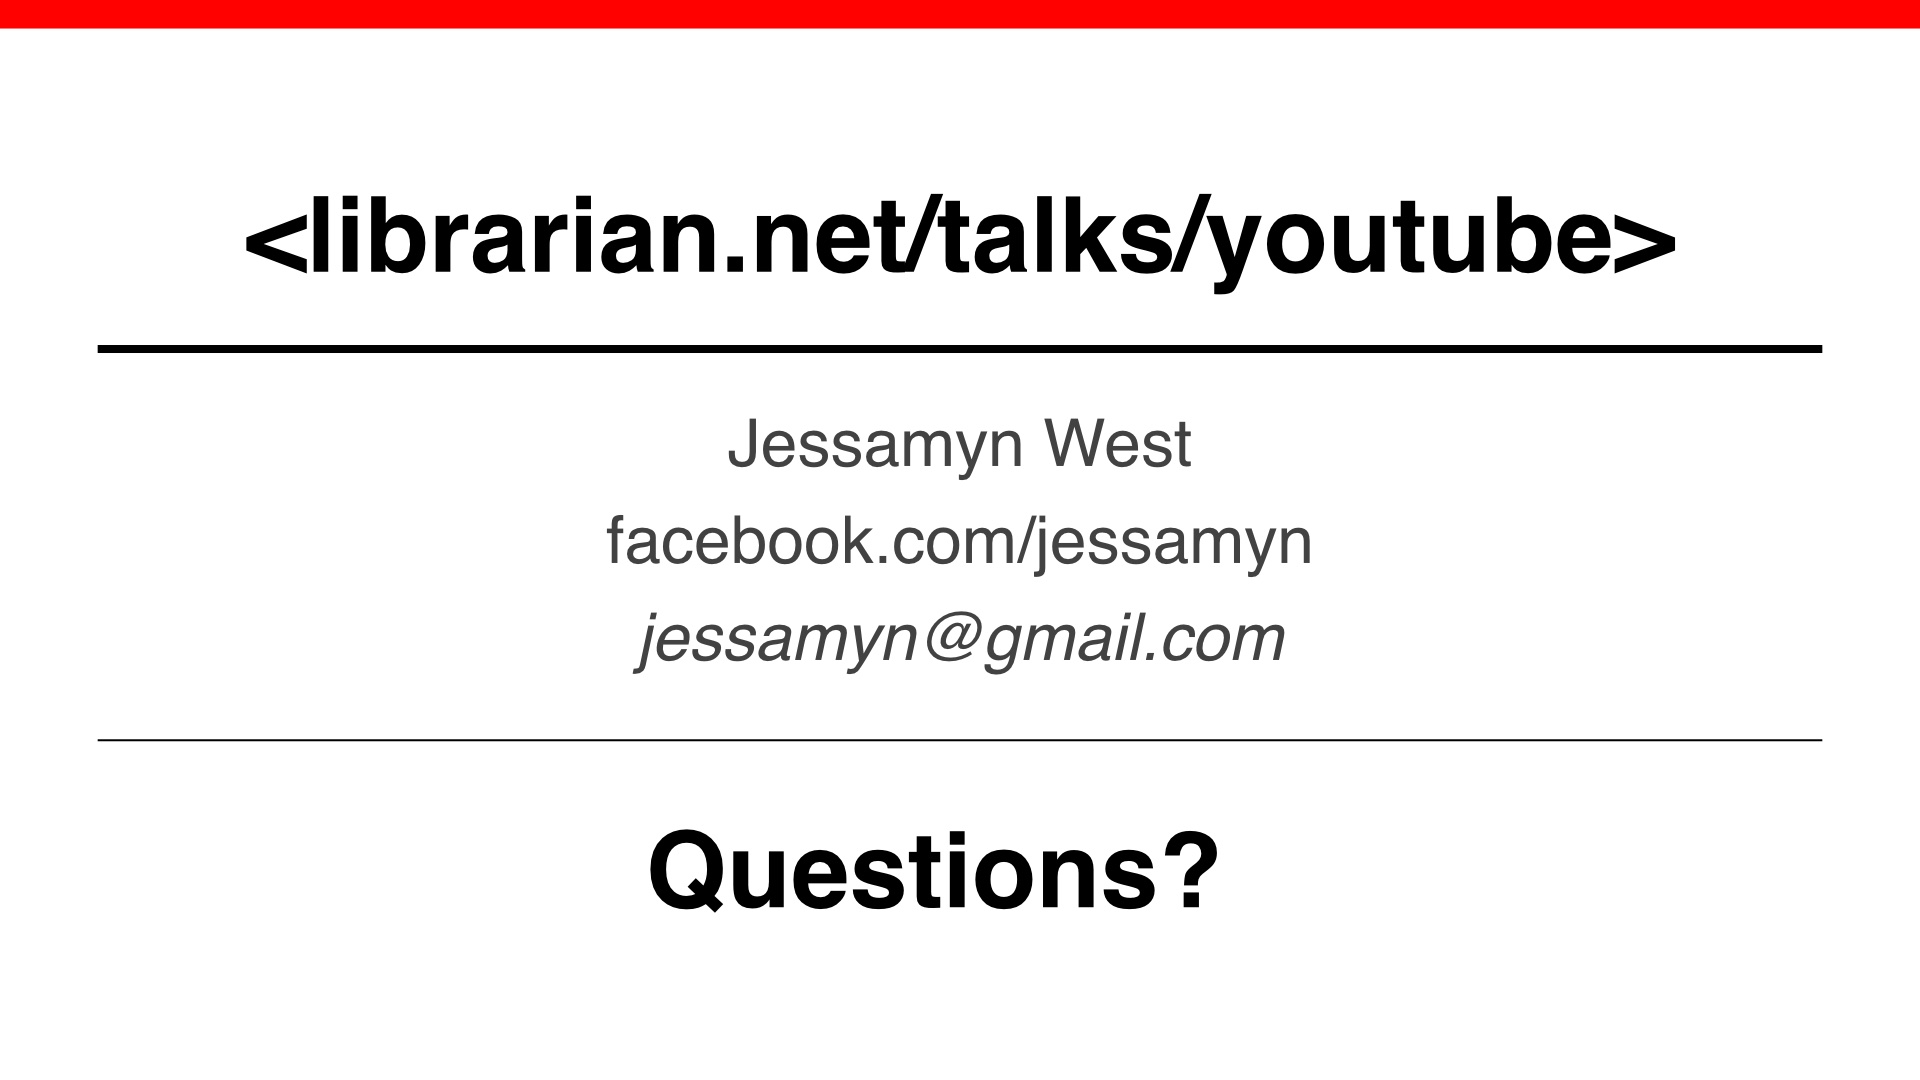 Final slide with URL of talk and my contact information: Jessamyn West, facebook.com/jessamyn, jessamyn@gmail.com. Questions?